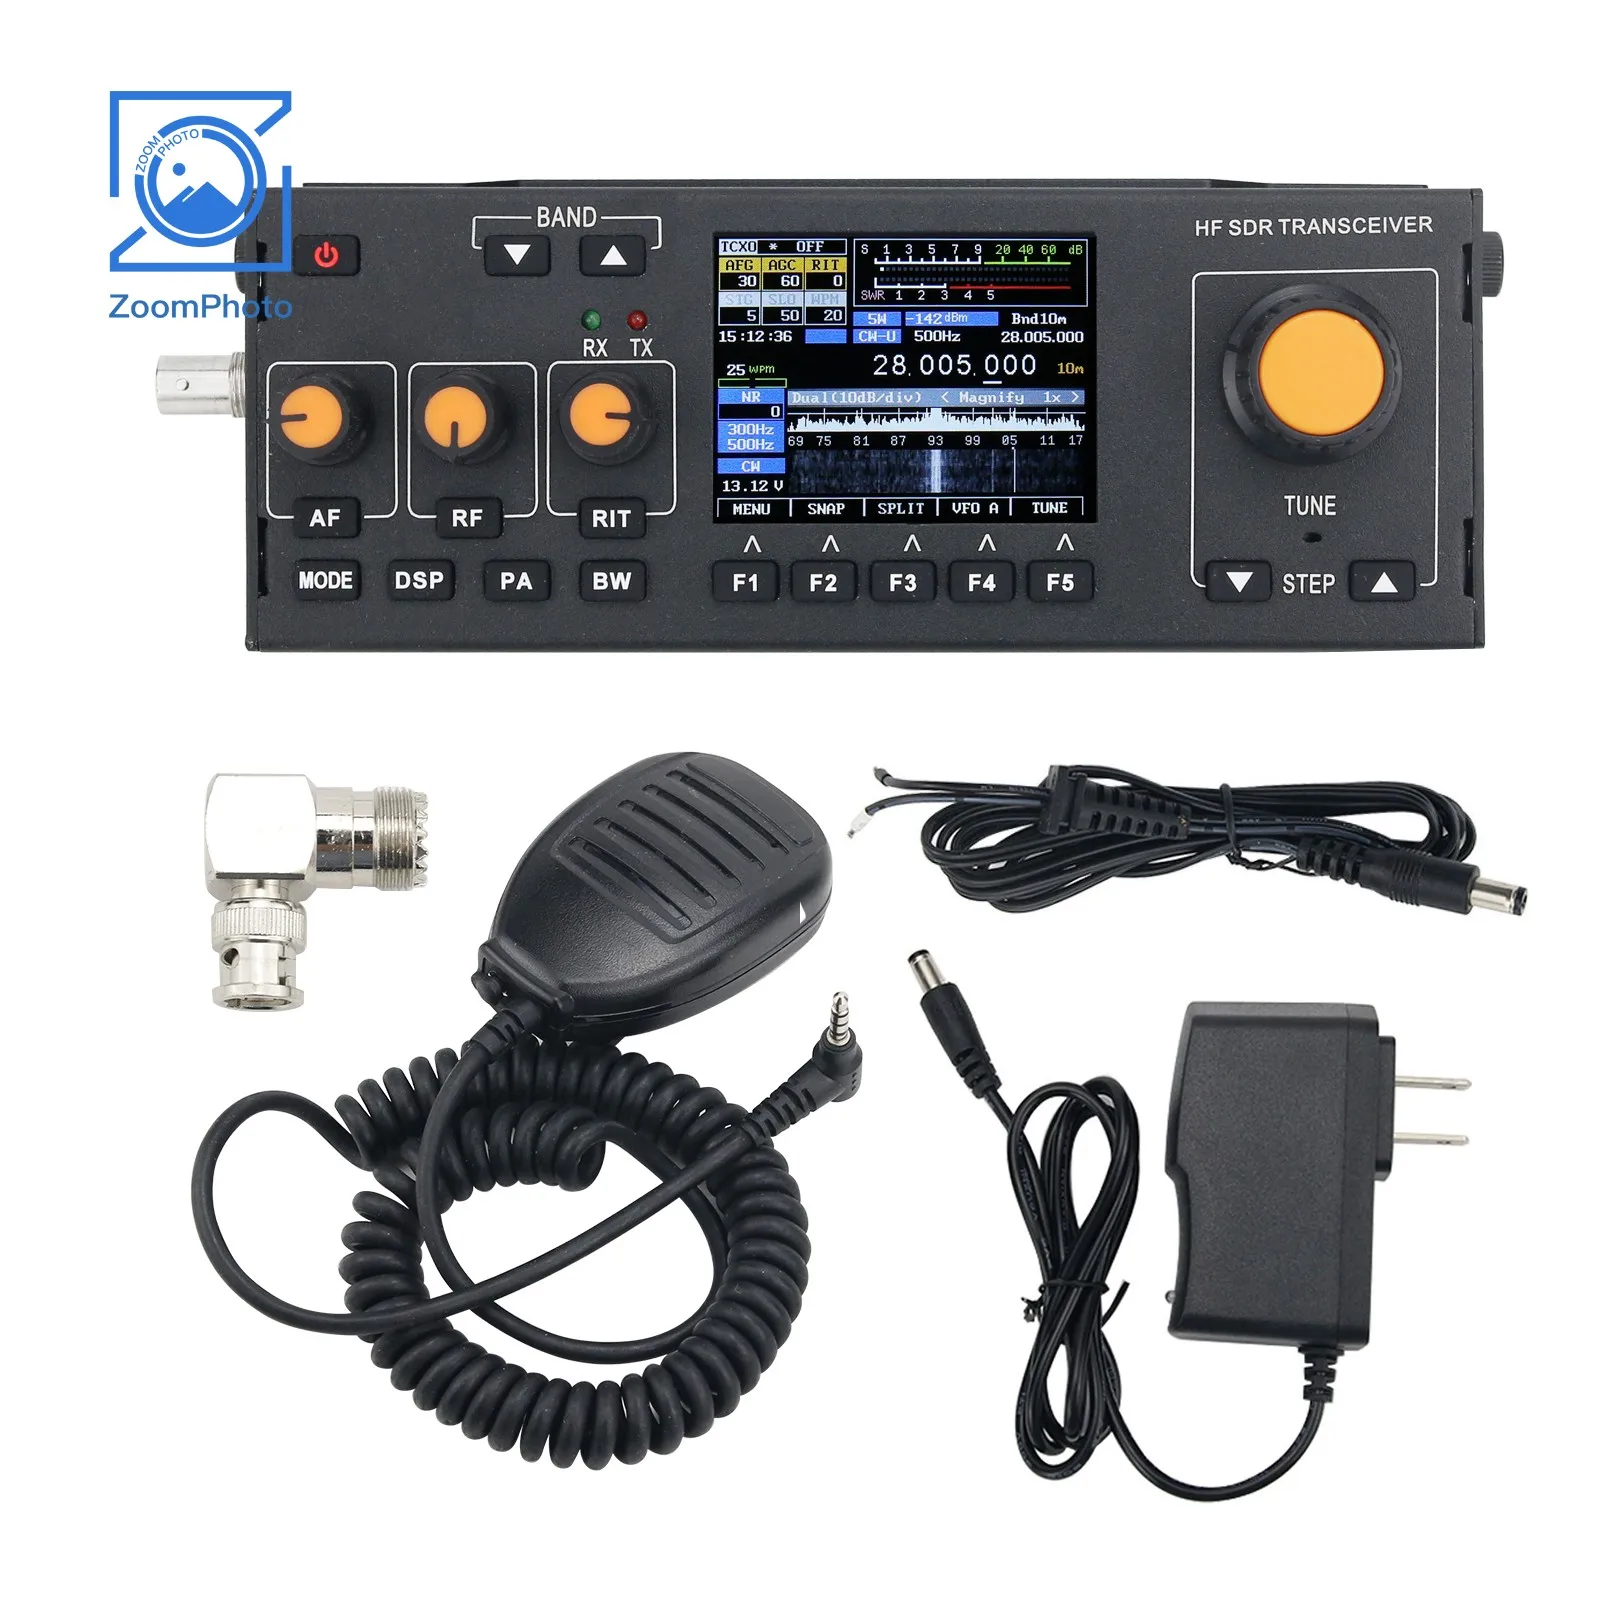 

RS-918 15W HF SDR Transceiver MCHF-QRP Transceiver Amateur Shortwave Radio w/ Handheld Mic Charger